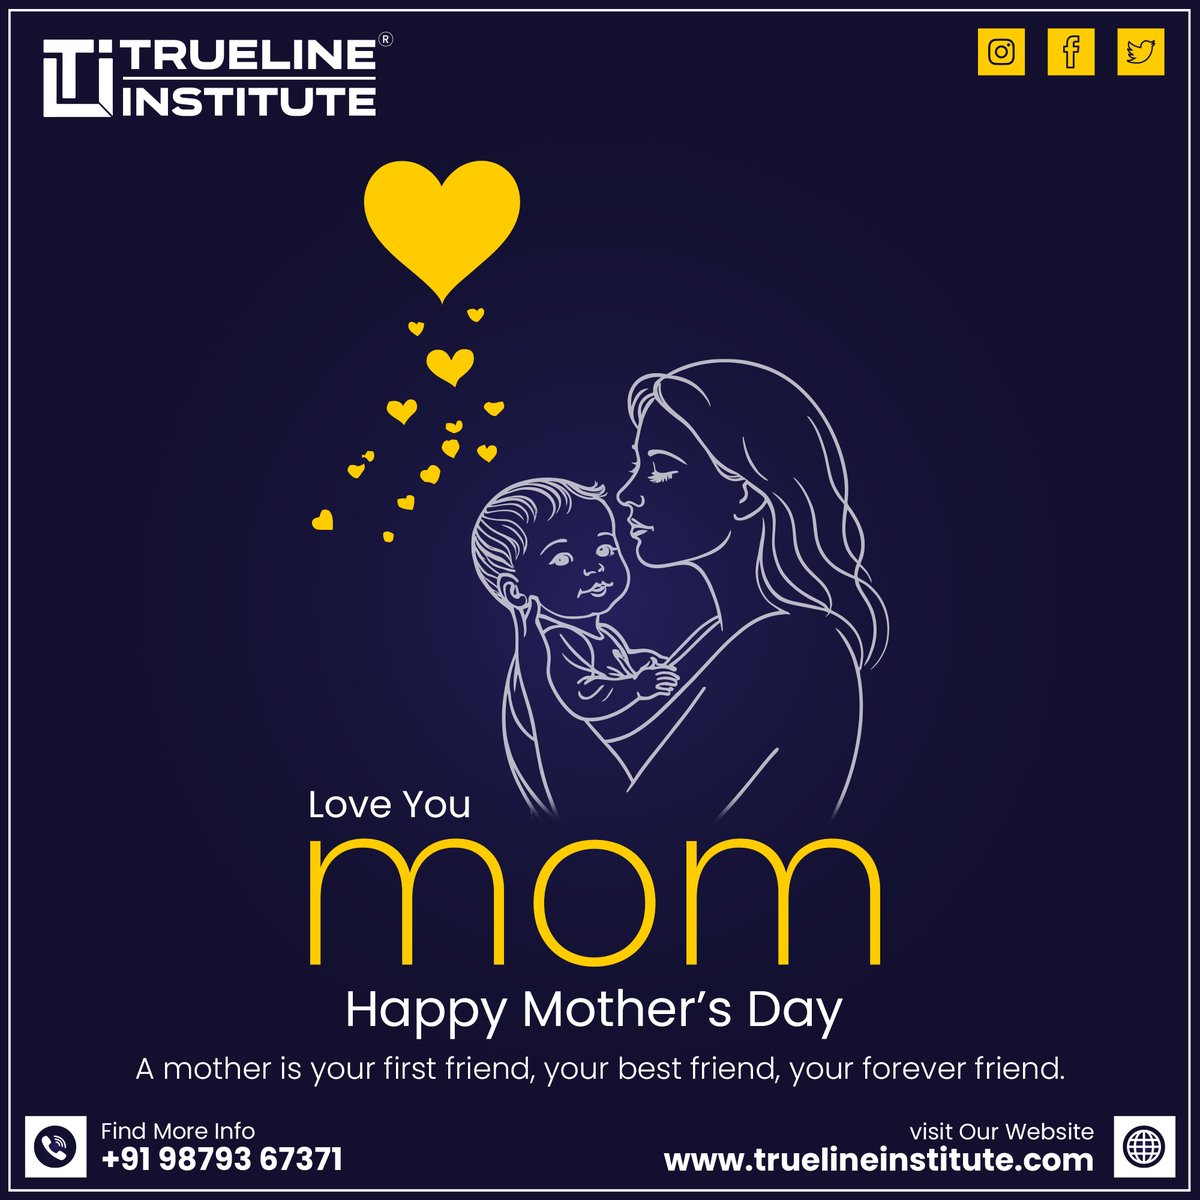 📢 Happy Mother’s Day | Trueline Institute
☎️ +91 98793 67371
🌐truelineinstitute.com
📧truelineinstitute@gmail.com
#truelineinstitute #institute #itcourses #happymothersday #momlove #motherhood #thankyoumom #bestmomever #momsarespecial